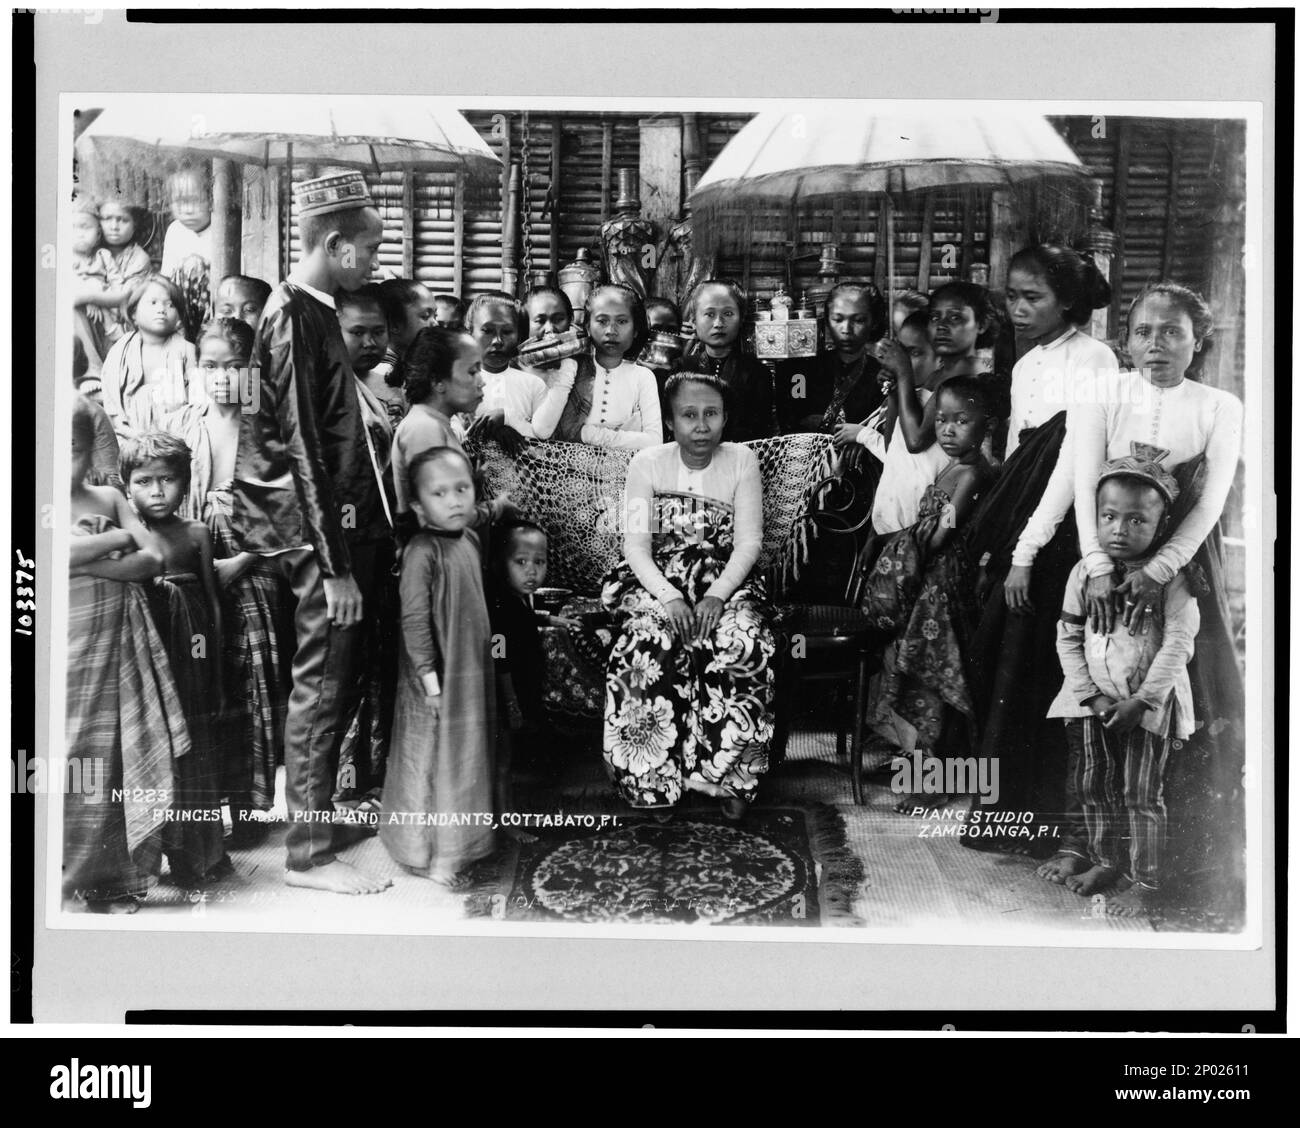 Prinzen sic Radcai Radja? Nein. Putrie und Pfleger, Cottabatoi Cotabato, Privatdetektiv Piang Studio, Zamboanga, P.I. , Princes Radca Putrie and Attendants, Cottabato, P.I..Princess Radja Putrie and Attendants, Cotabato, P.I.. No. 223, Frank and Frances Carpenter Collection, Princesses,Philippines,Cotabato,1900-1930, Servants,Philippines,Cotabato,1900-1930. Stockfoto